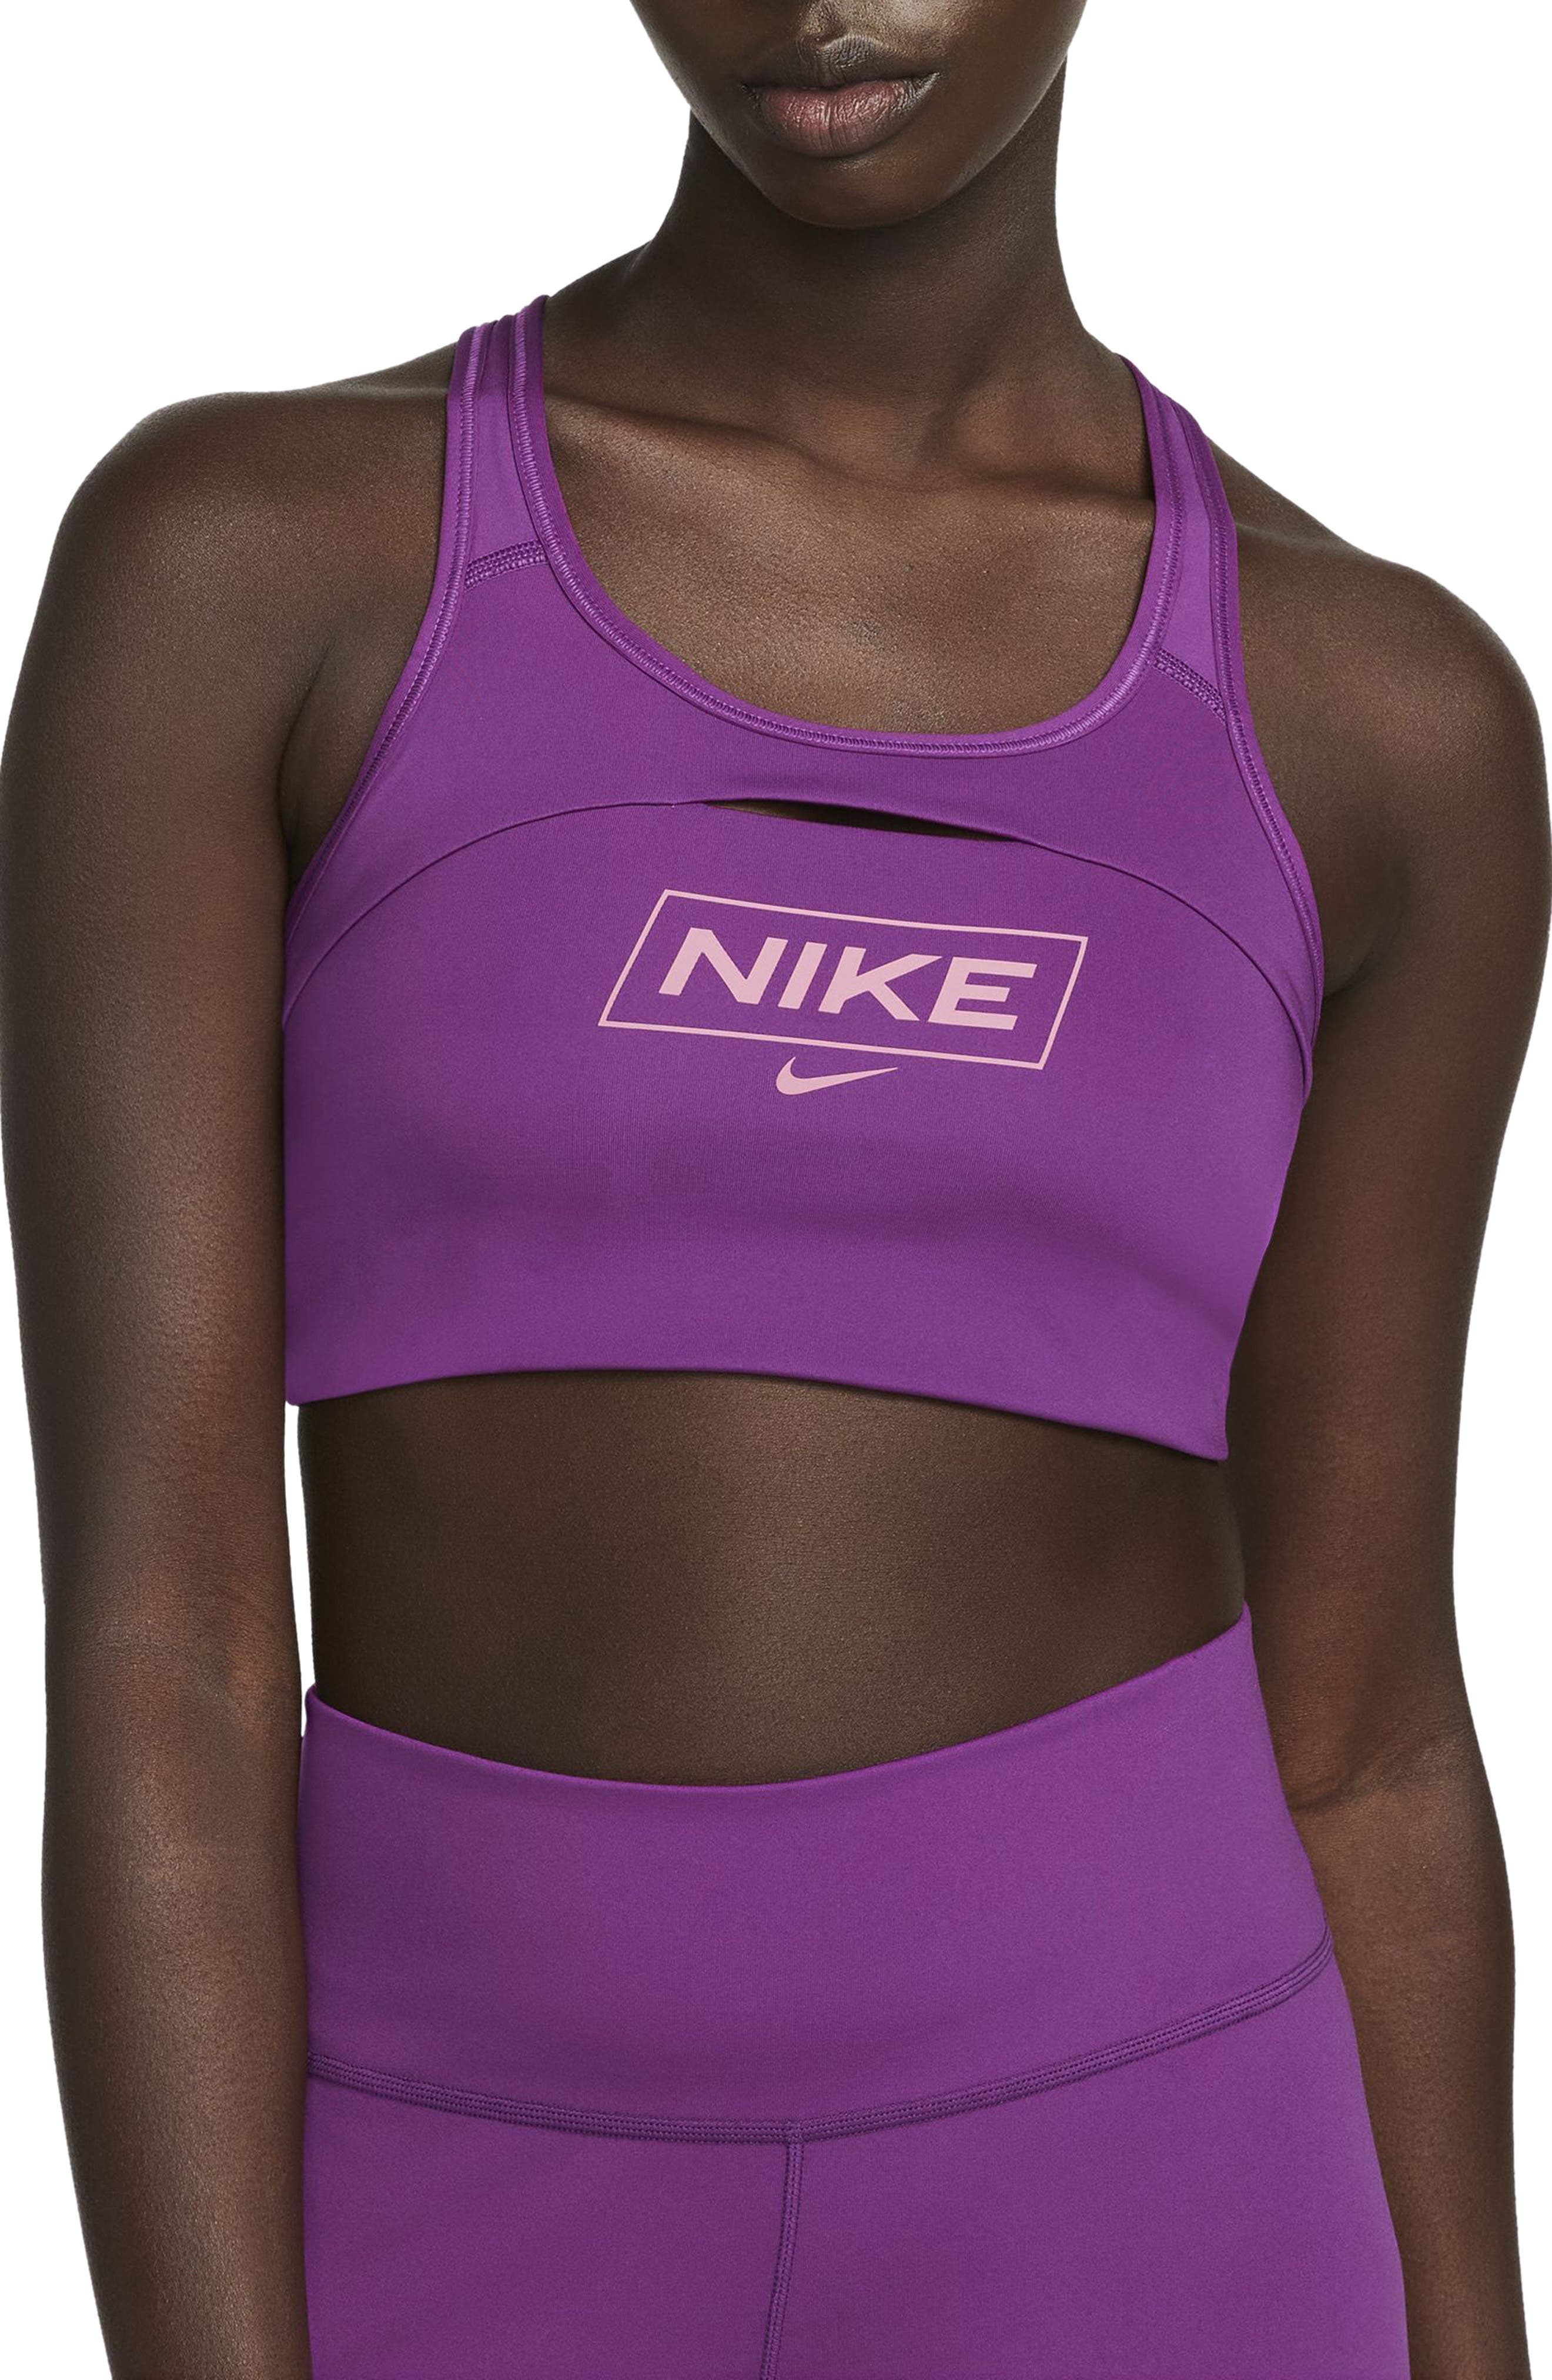 Nike Pro Racerback Small Purple Sports Bra Tank Top Sports Training Women